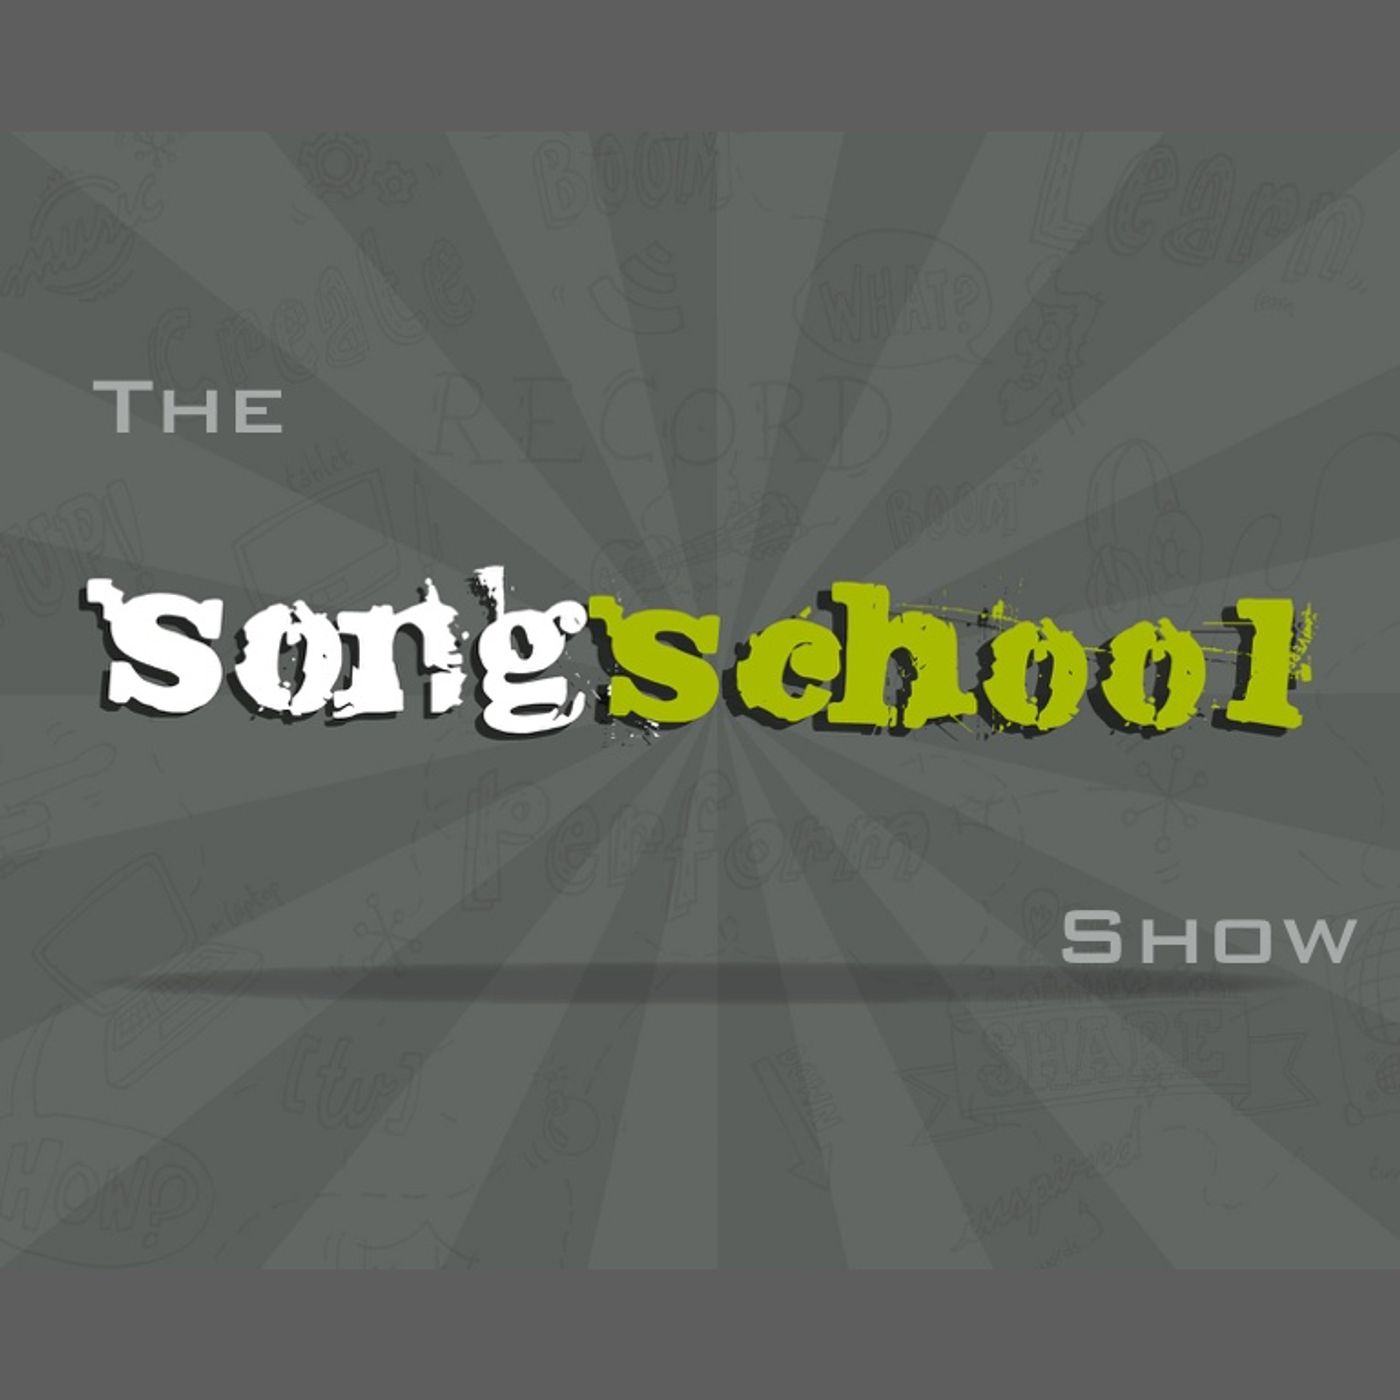 The Songschool show @ Lisdoonvarna